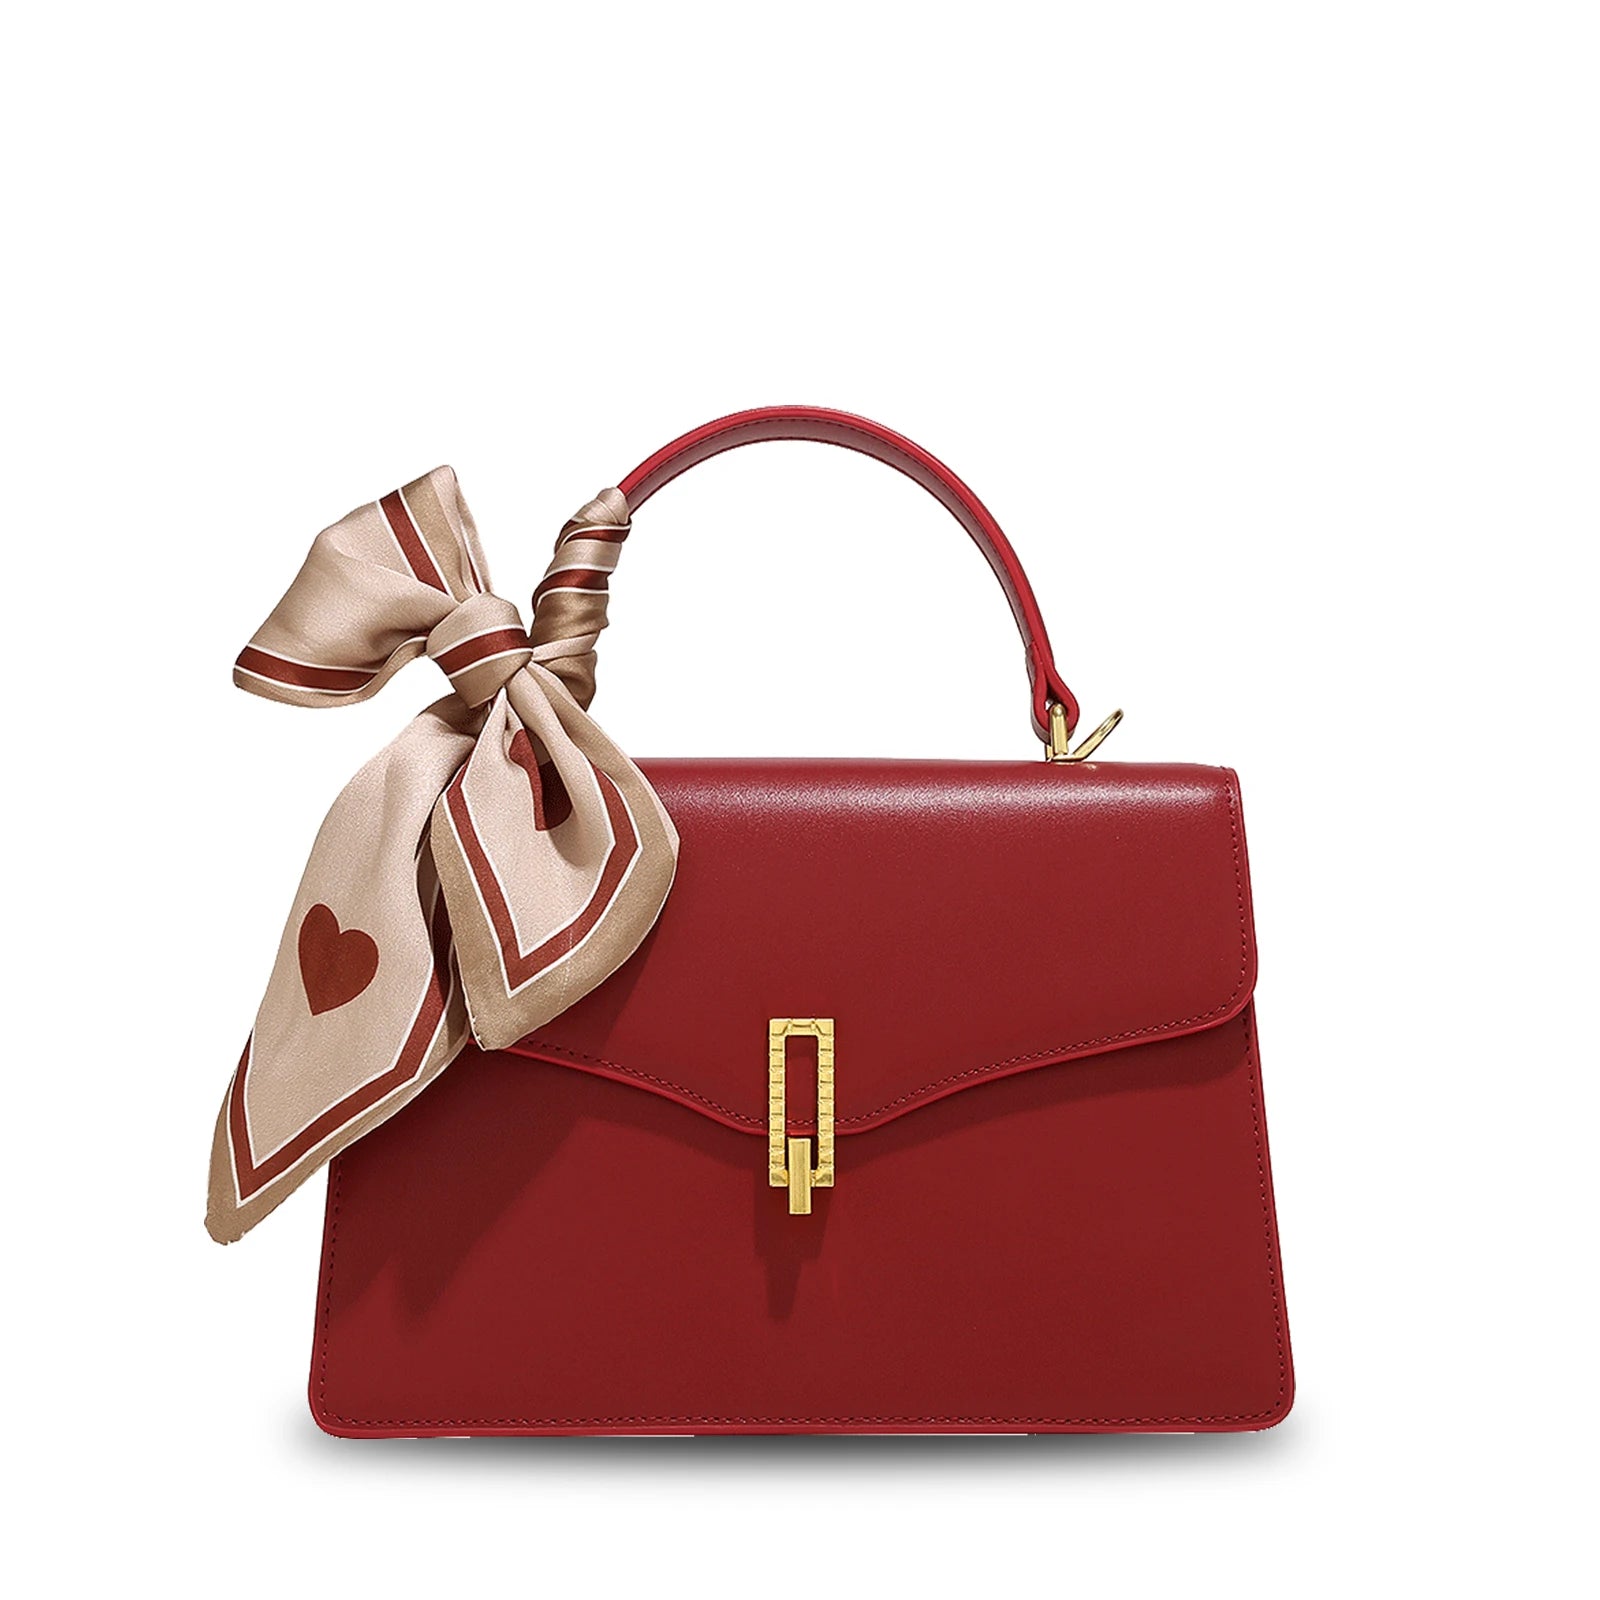 sac rouge luxe avec foulard